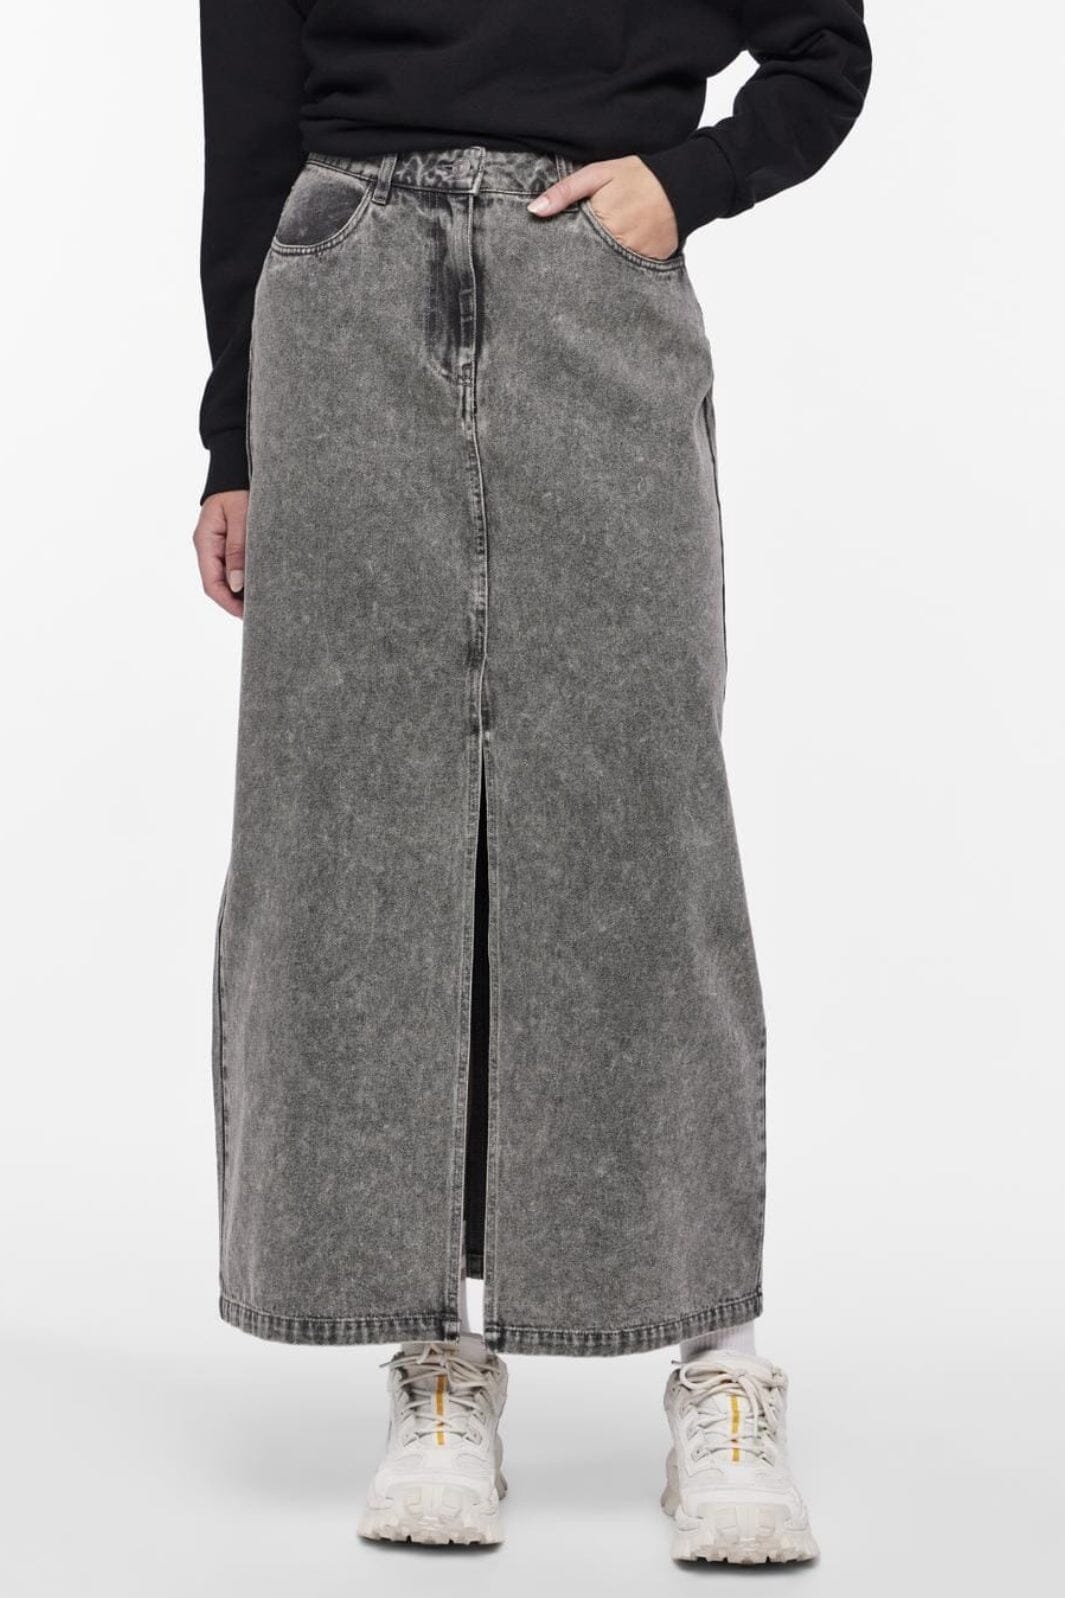 Pieces - Pcdanu Long Denim Skirt - 4501198 Light Grey Denim Nederdele 